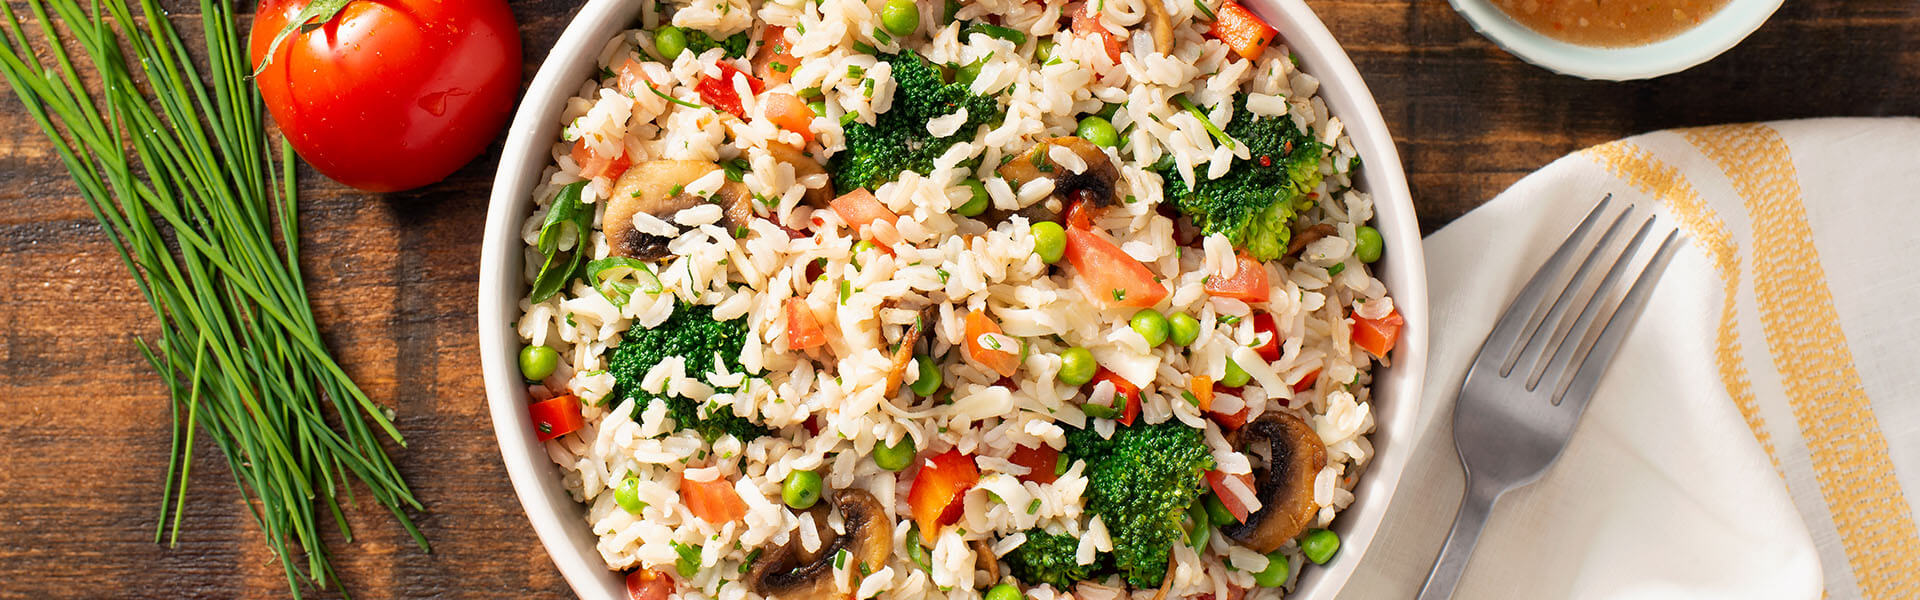 Veggie-Packed Mediterranean Rice Bowl Salad